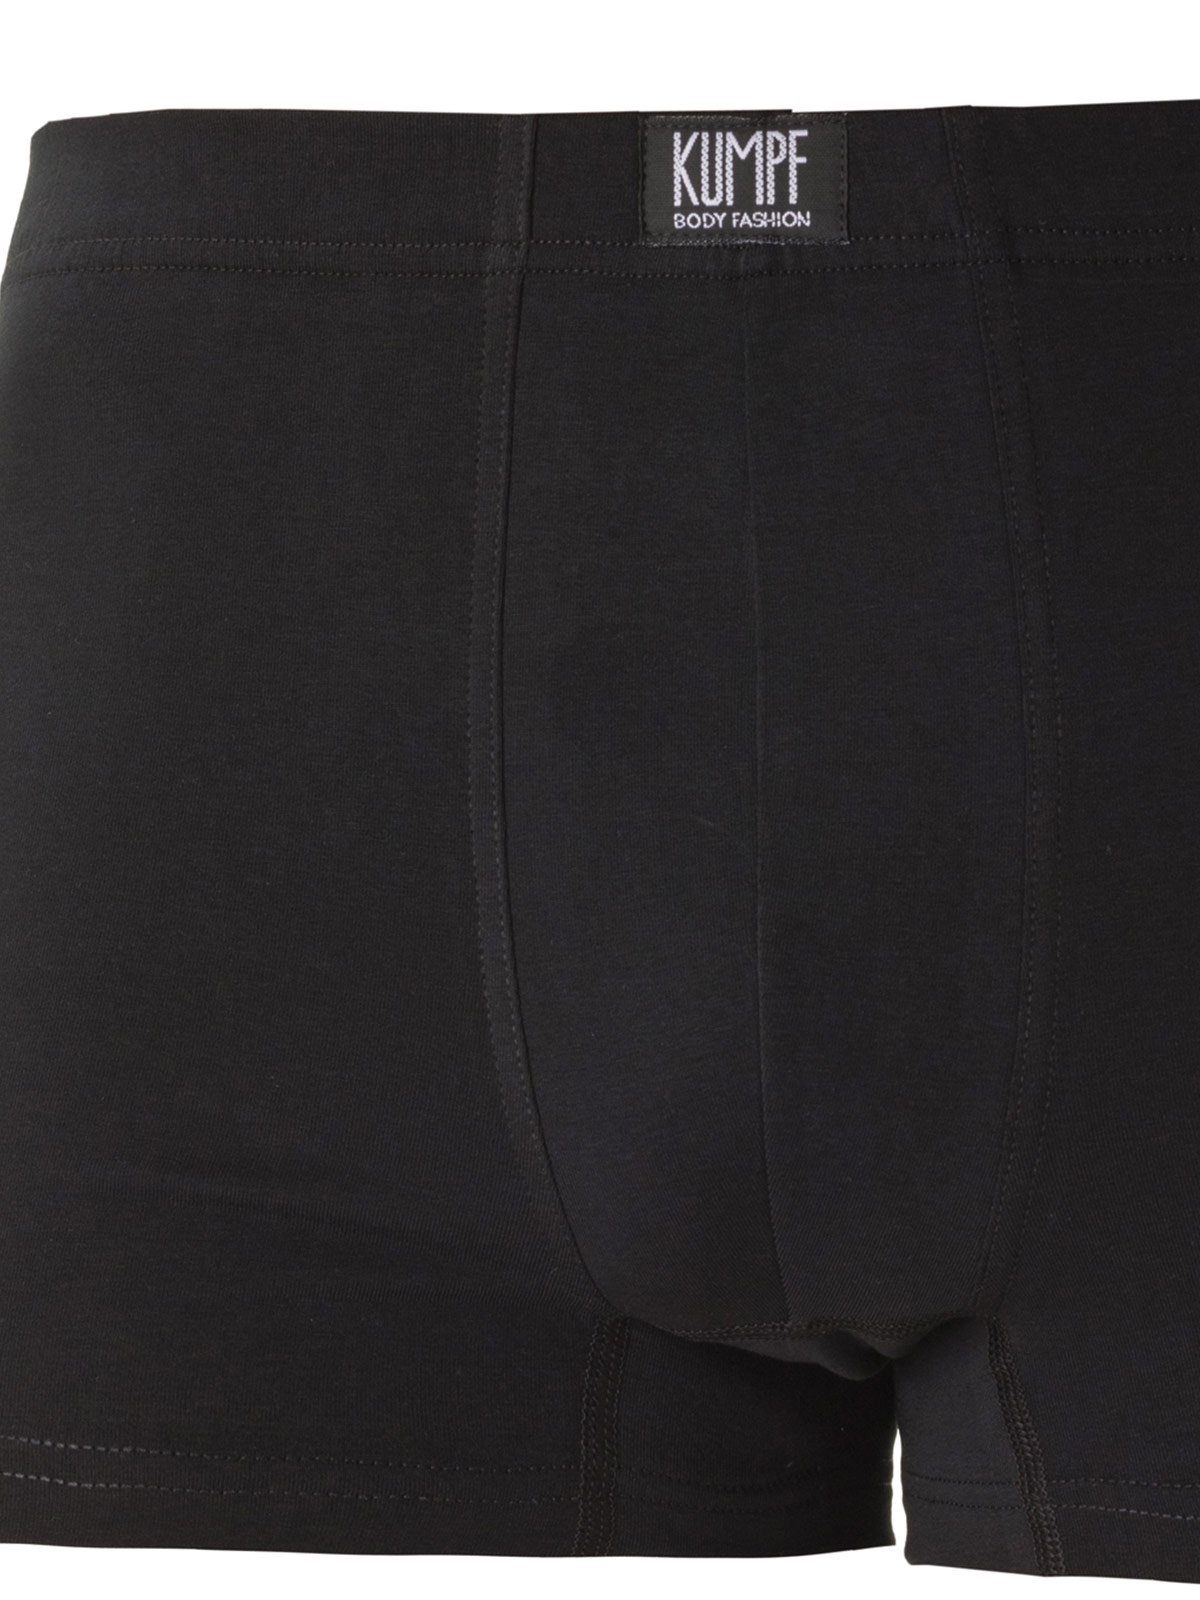 KUMPF Retro Pants Bio hohe Markenqualität Herren Pants schwarz (Stück, Cotton 1-St)